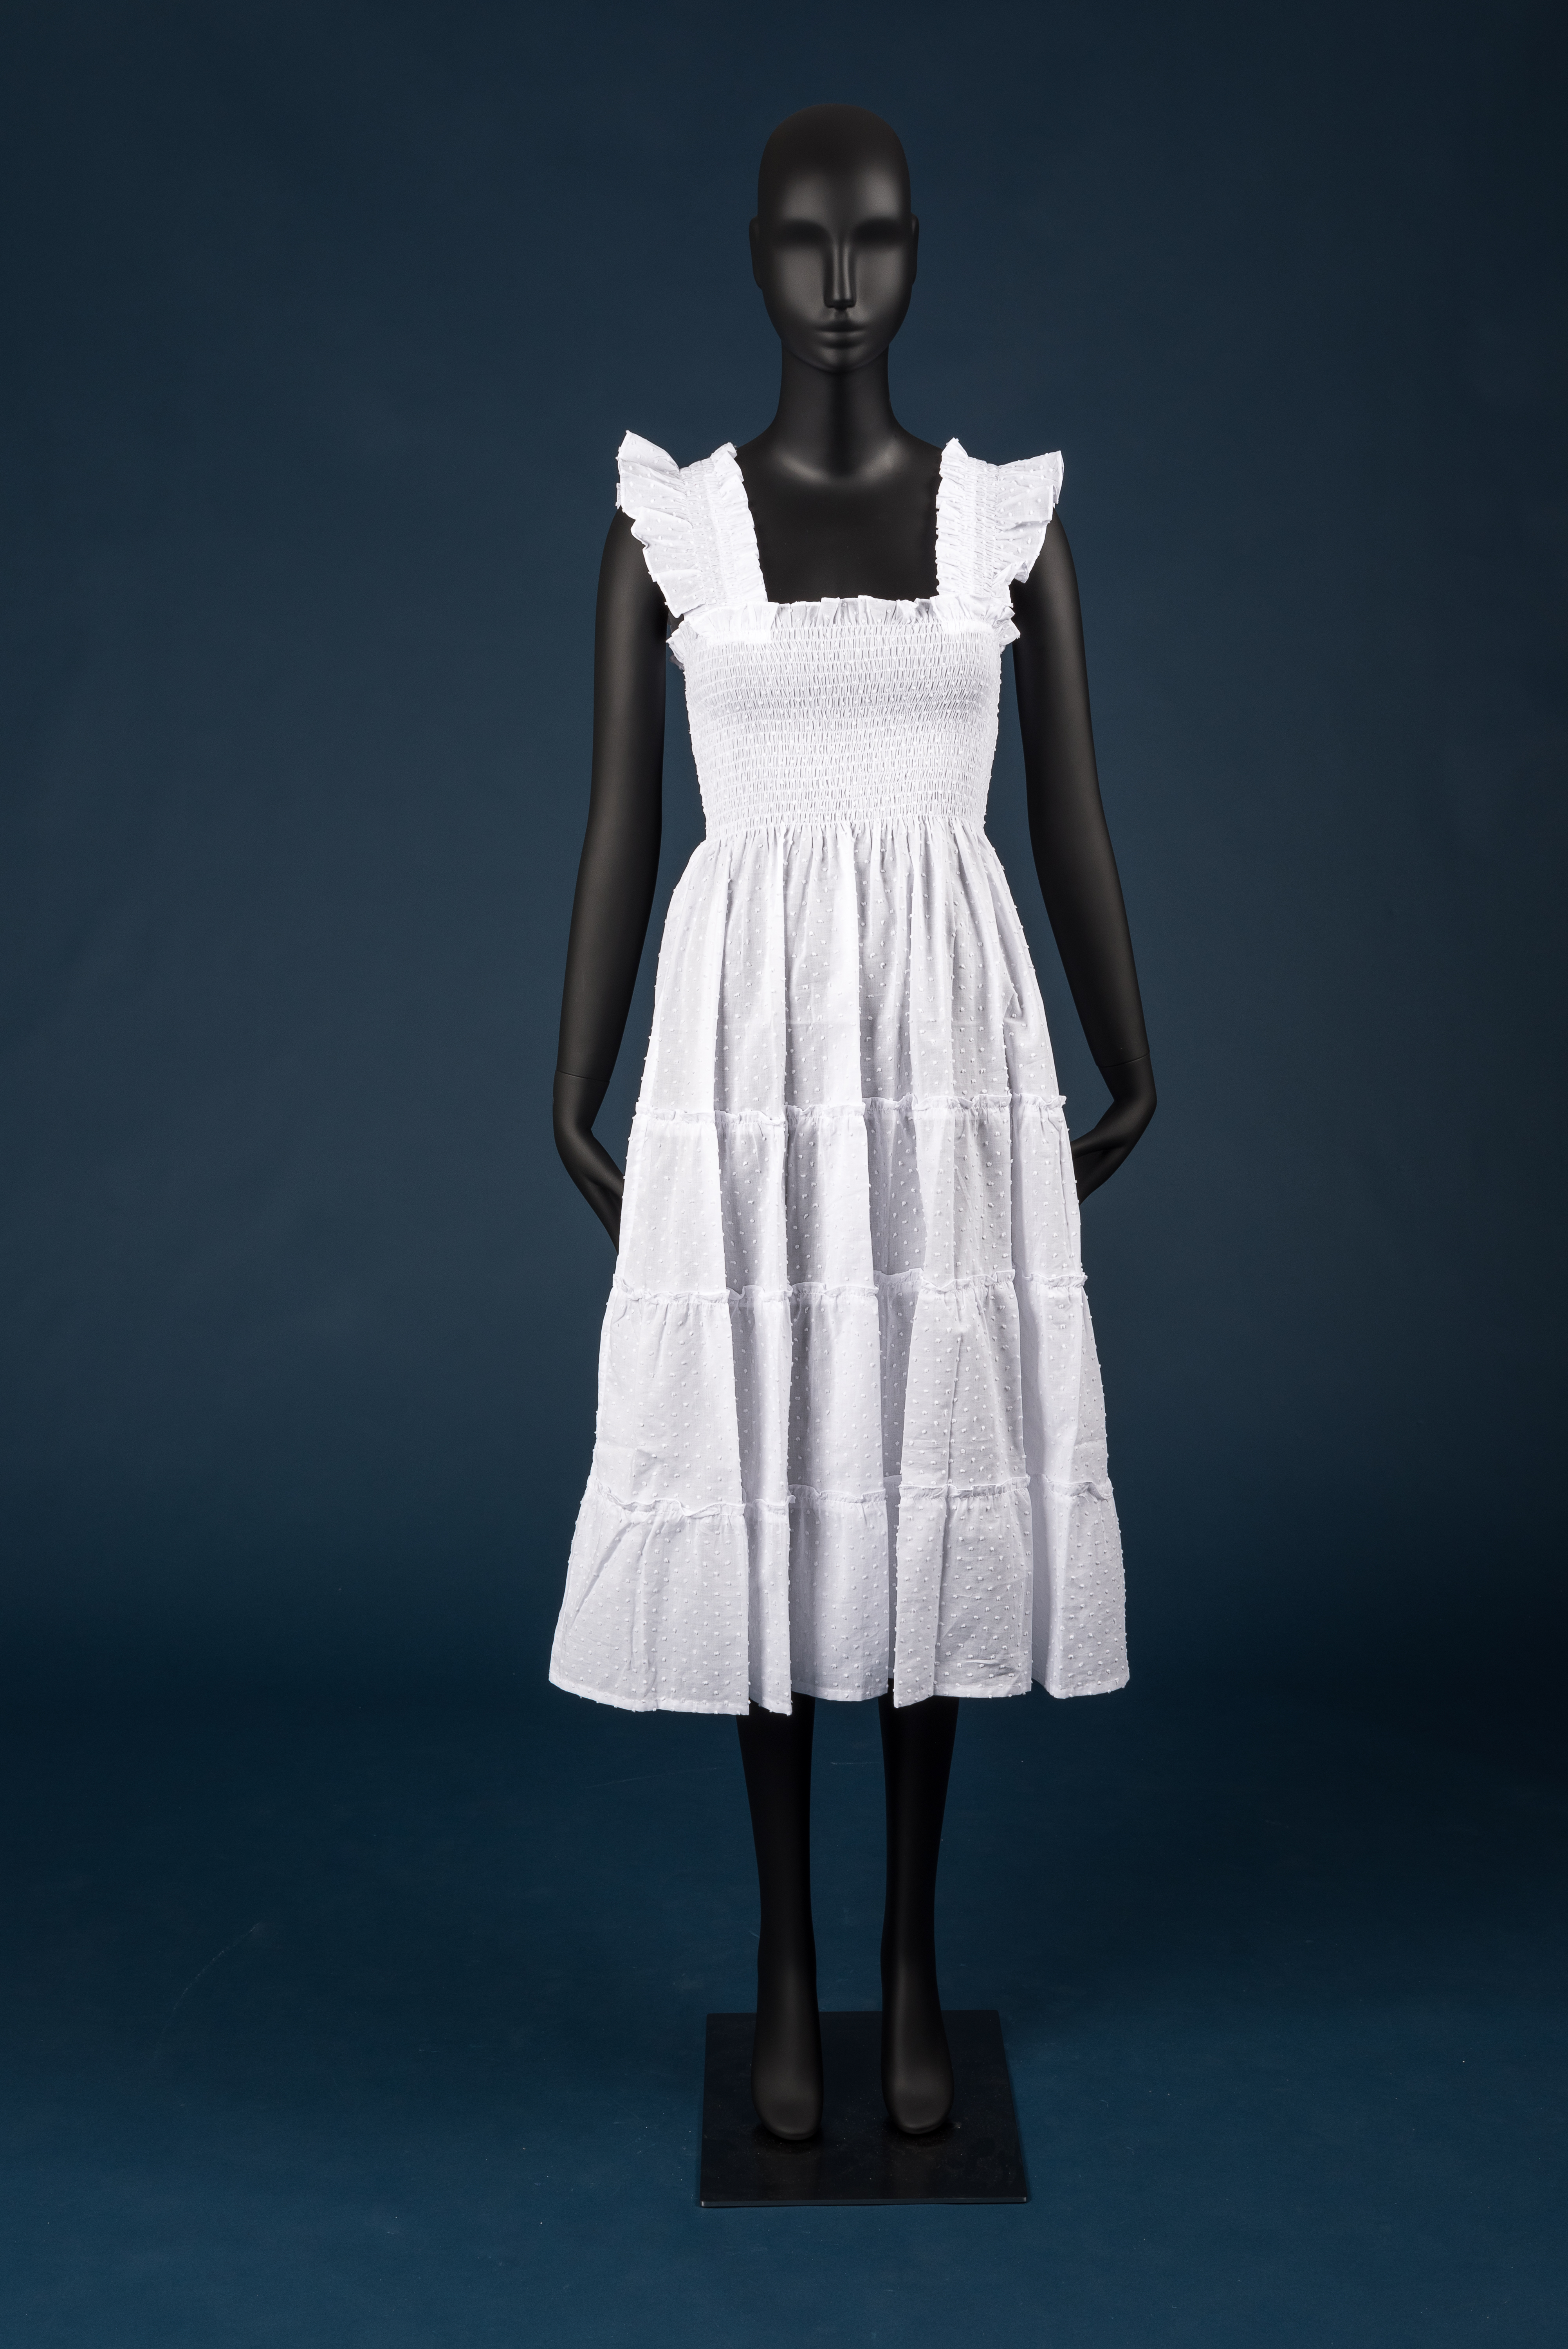 Nell Diamond's "nap dress" design